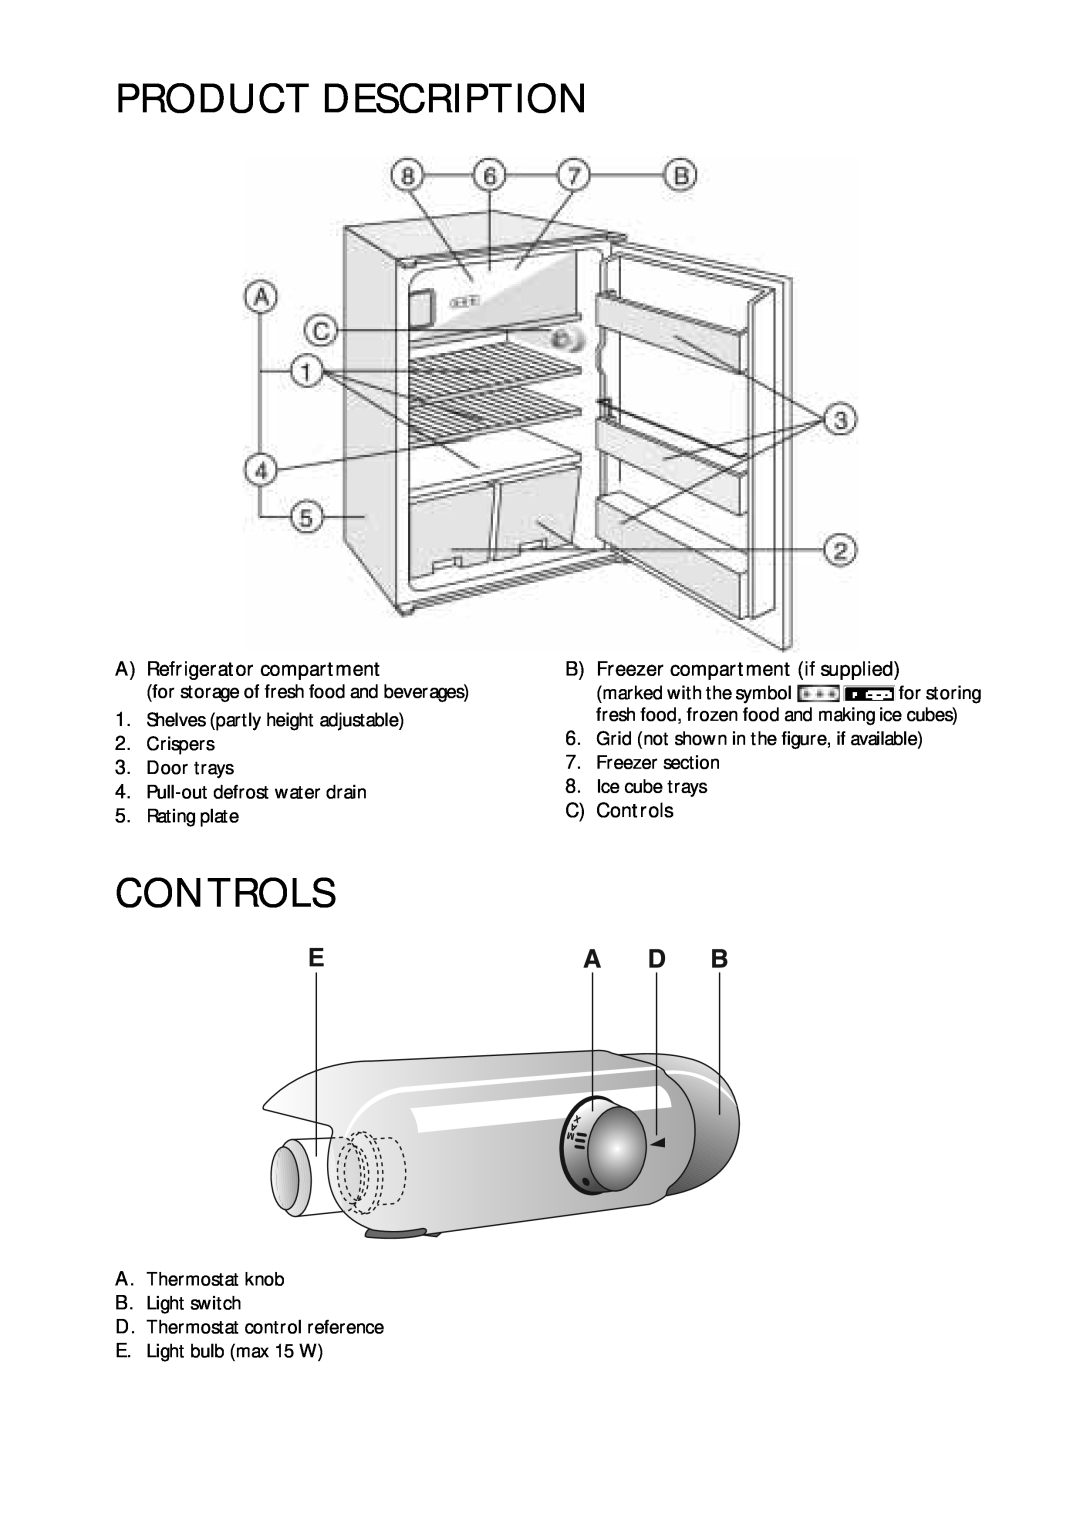 CDA FW420 manual Product Description, A Refrigerator compartment, B Freezer compartment if supplied, C Controls 